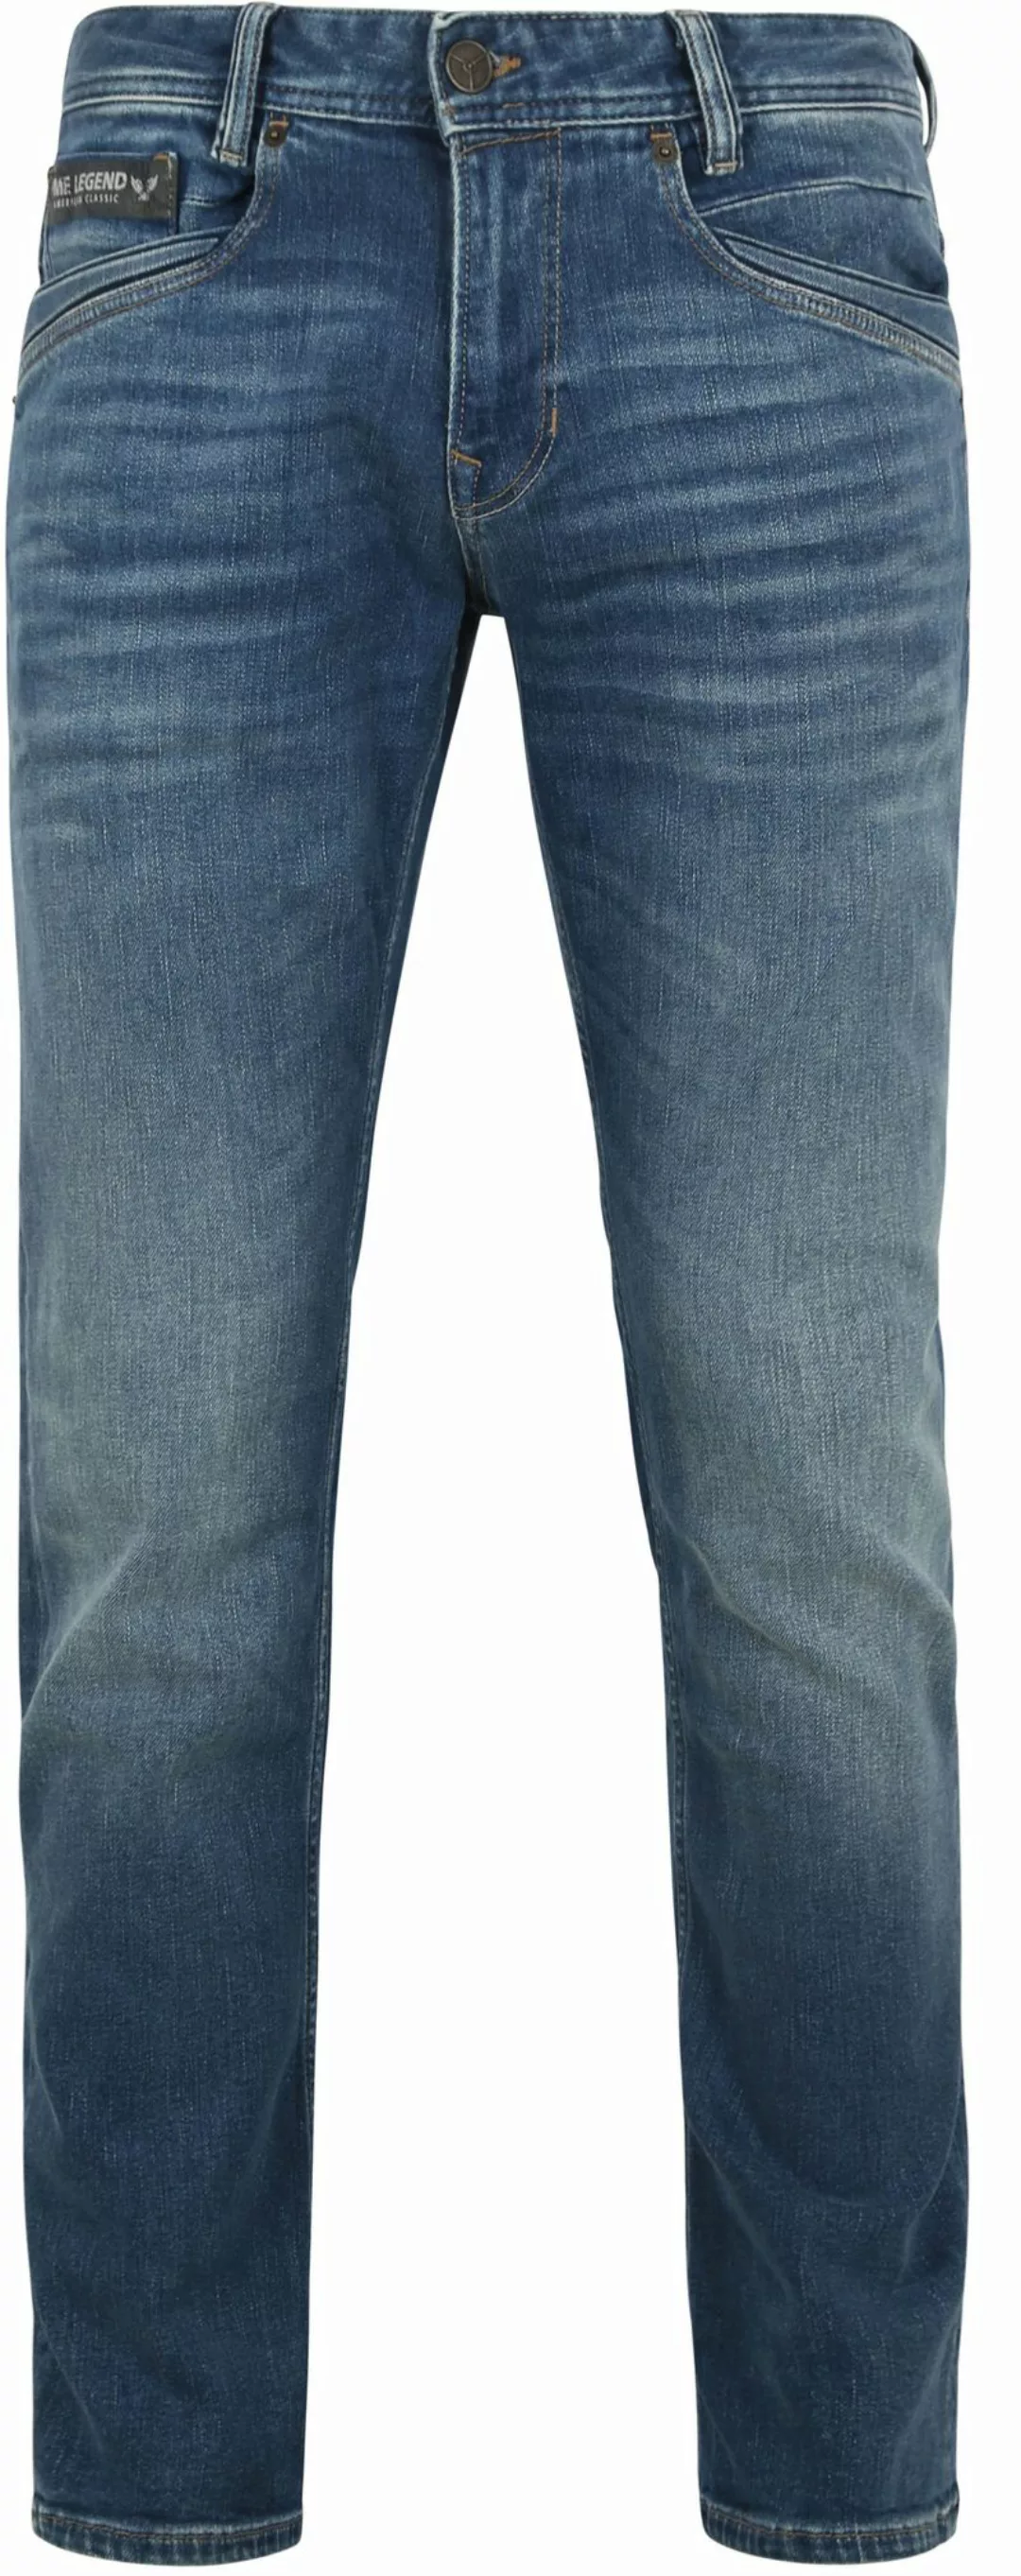 PME Legend Skyrak Jeans Blau HMB - Größe W 34 - L 36 günstig online kaufen